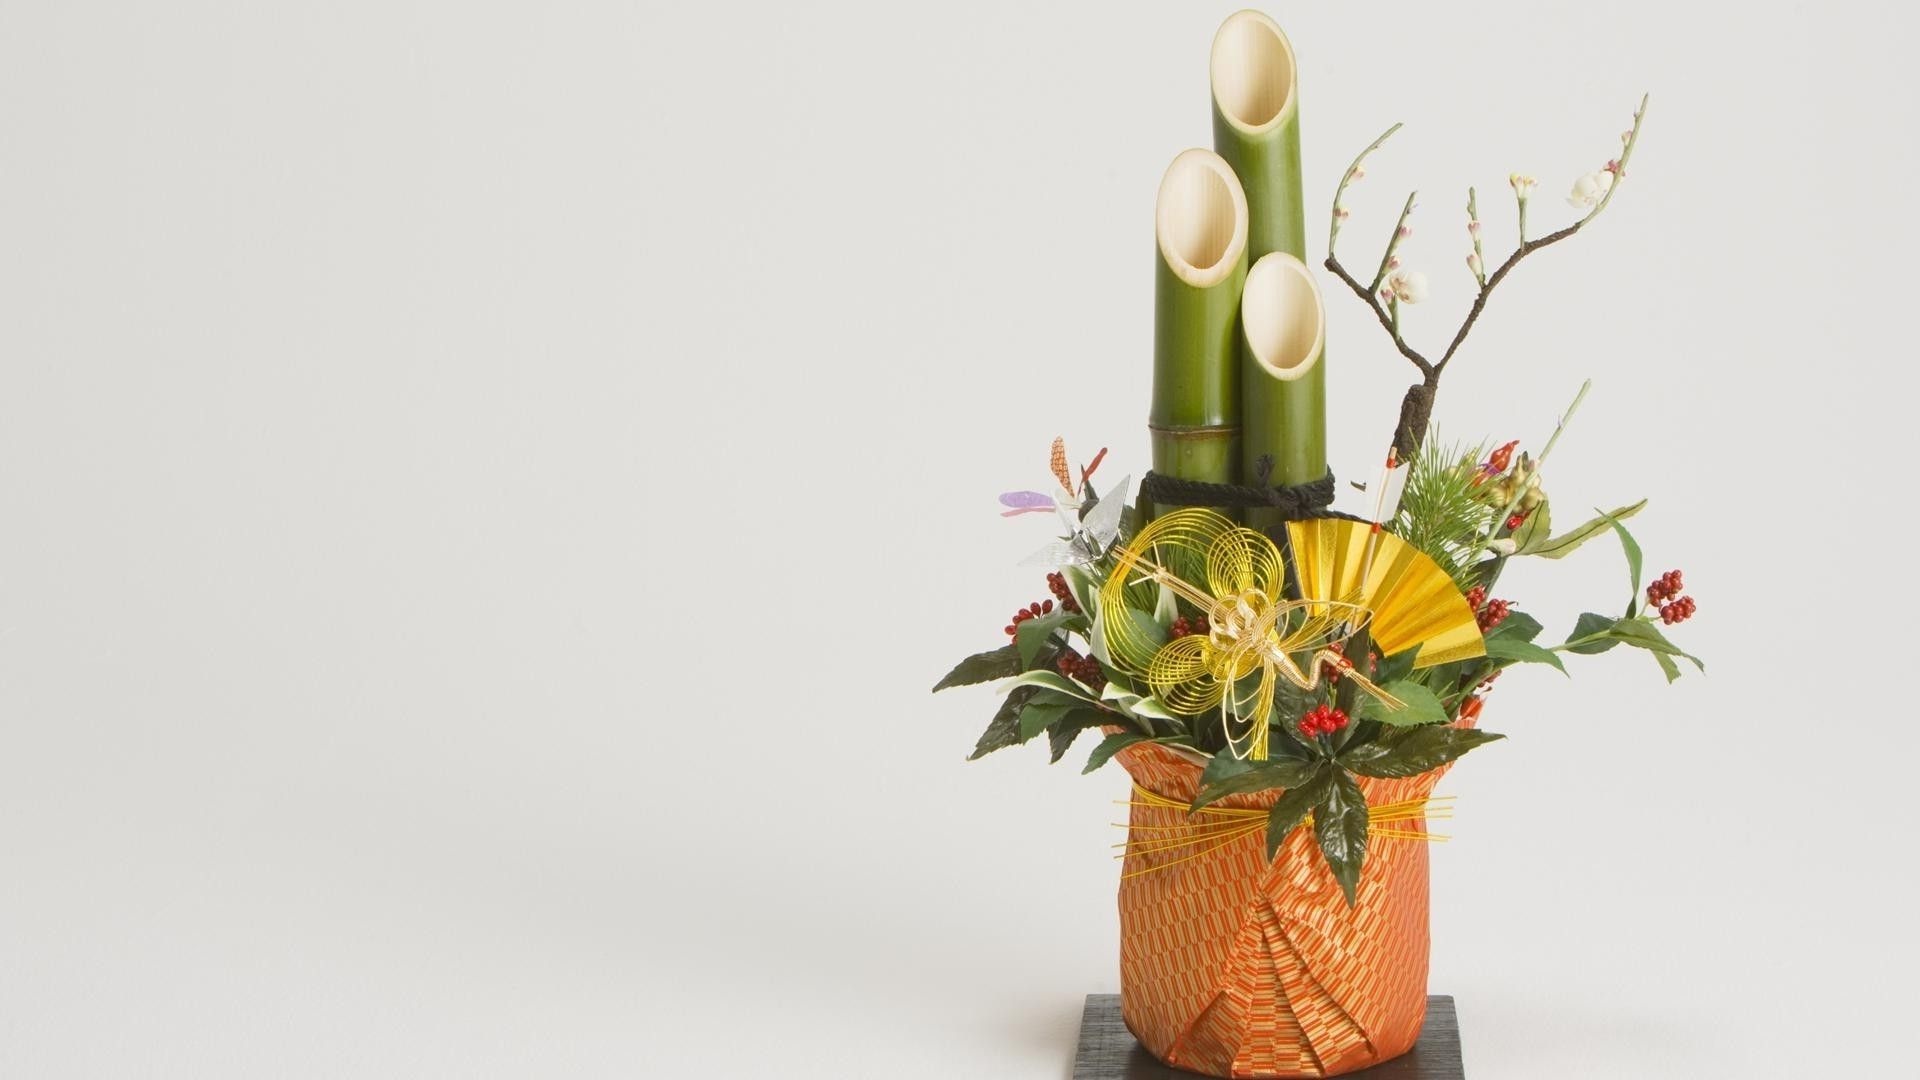 Japanese flower arrangement, Artistic plant compositions, Zen-like aesthetics, Harmonious balance, 1920x1080 Full HD Desktop